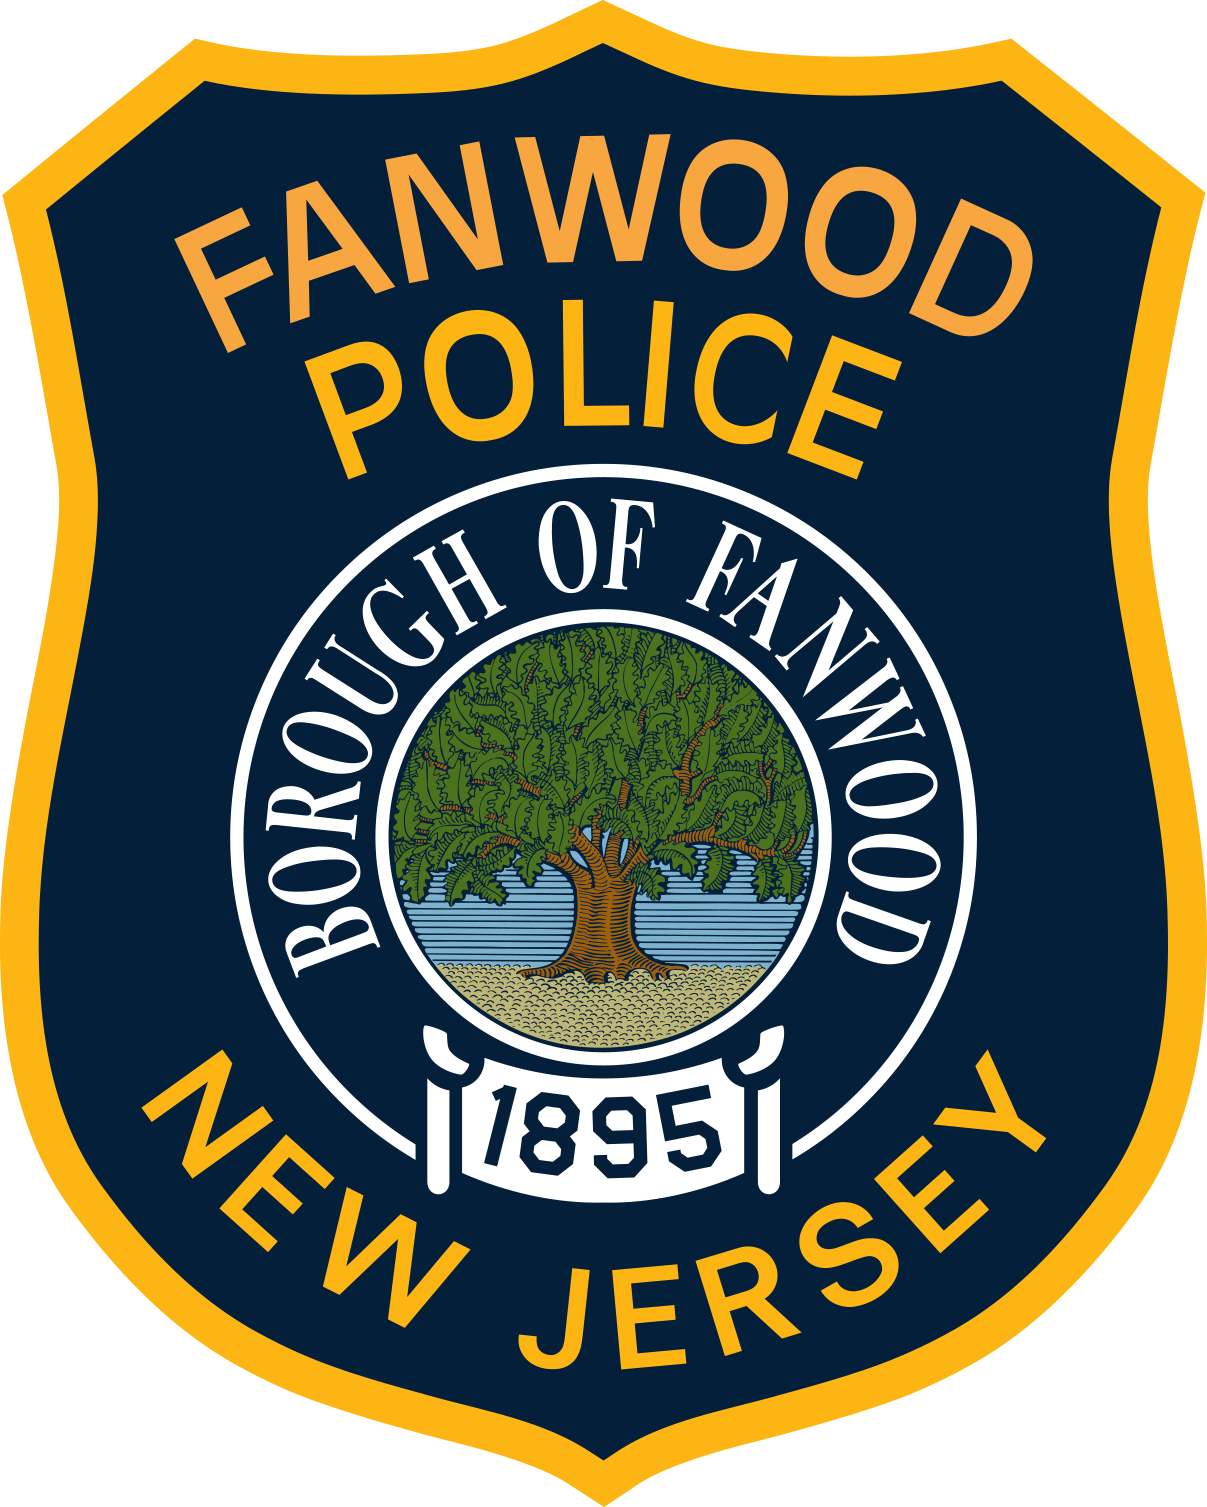 Fanwood Police Department, NJ Police Jobs